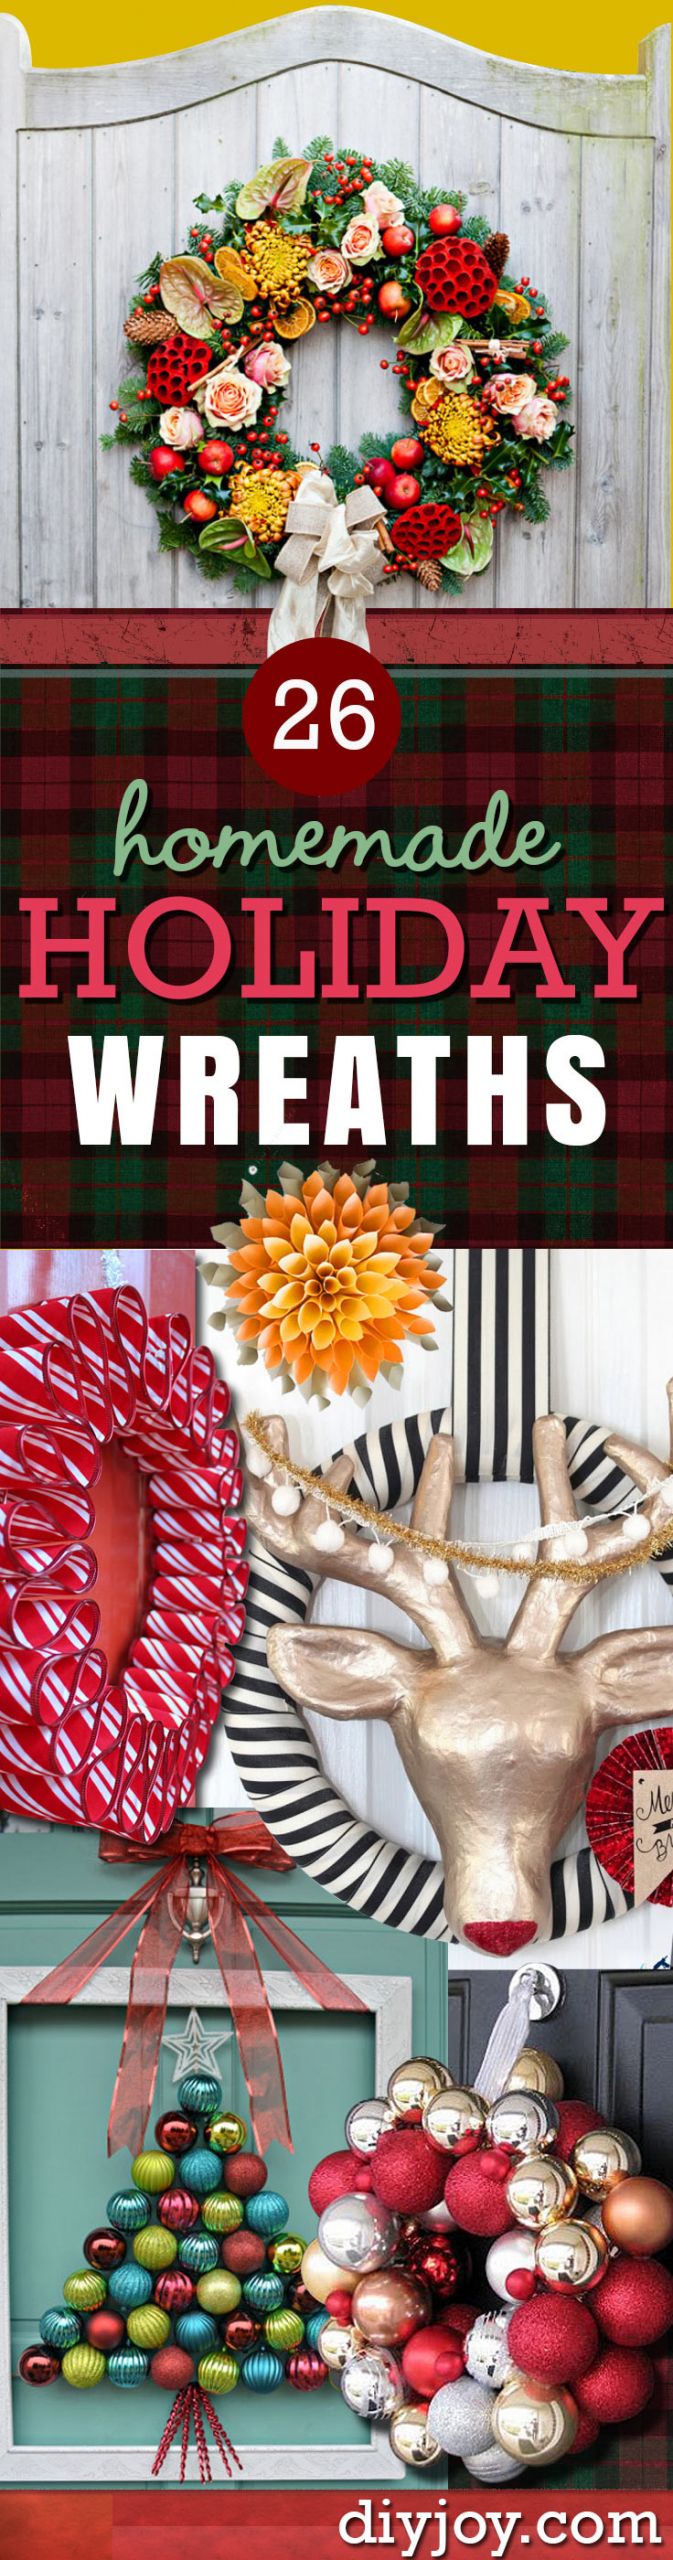 Christmas DIY Pinterest
 26 Most Beautiful DIY Holiday Wreaths Ever